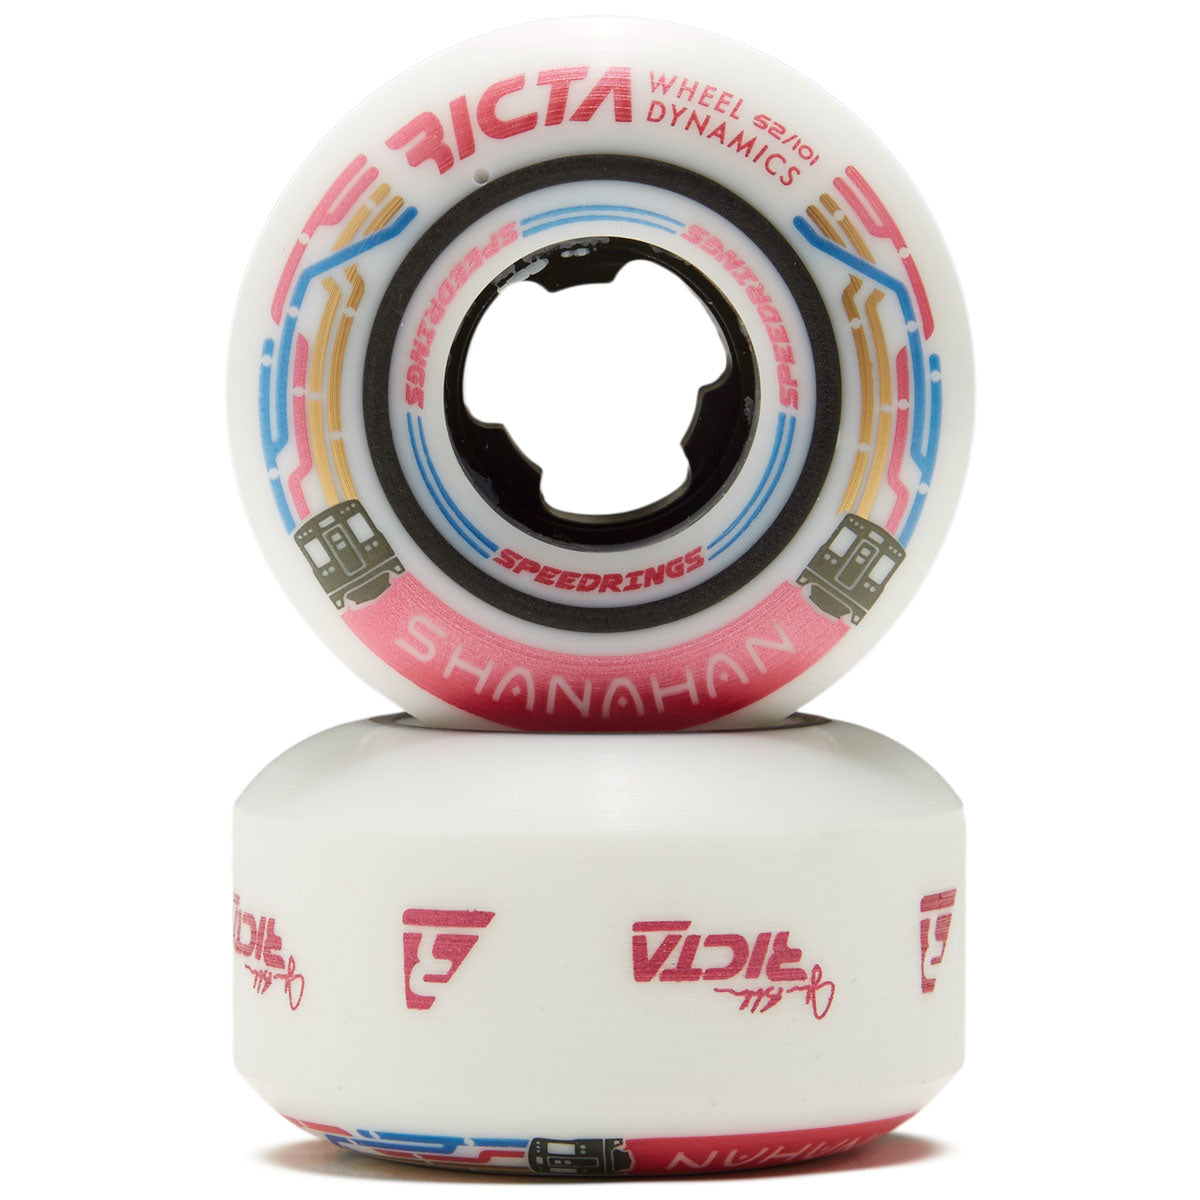 Ricta Shanahan Speedrings Slim 101a Skateboard Wheels - White - 52mm image 2